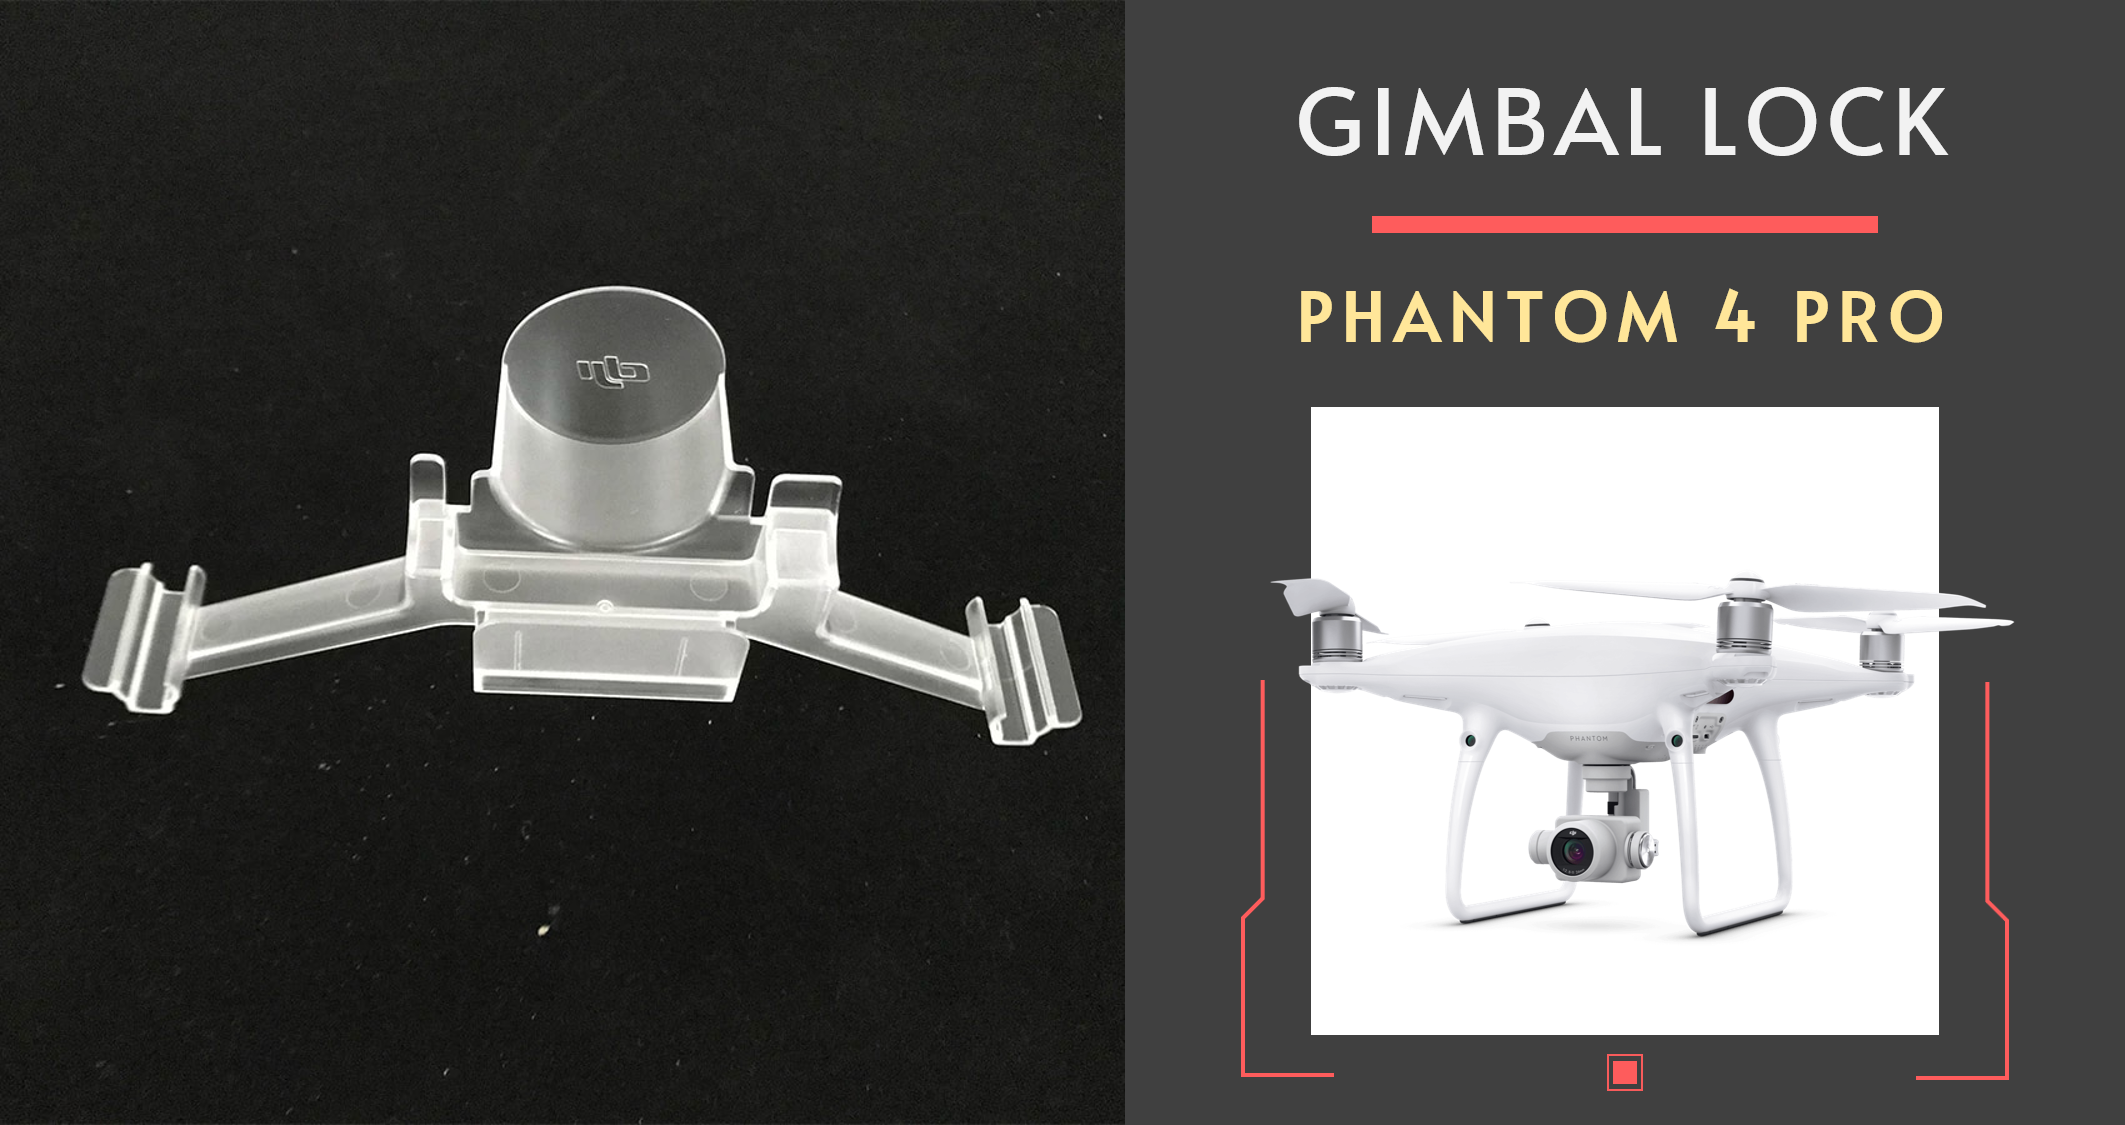 gimbal-lock-phantom-4-pro-chinh-hang